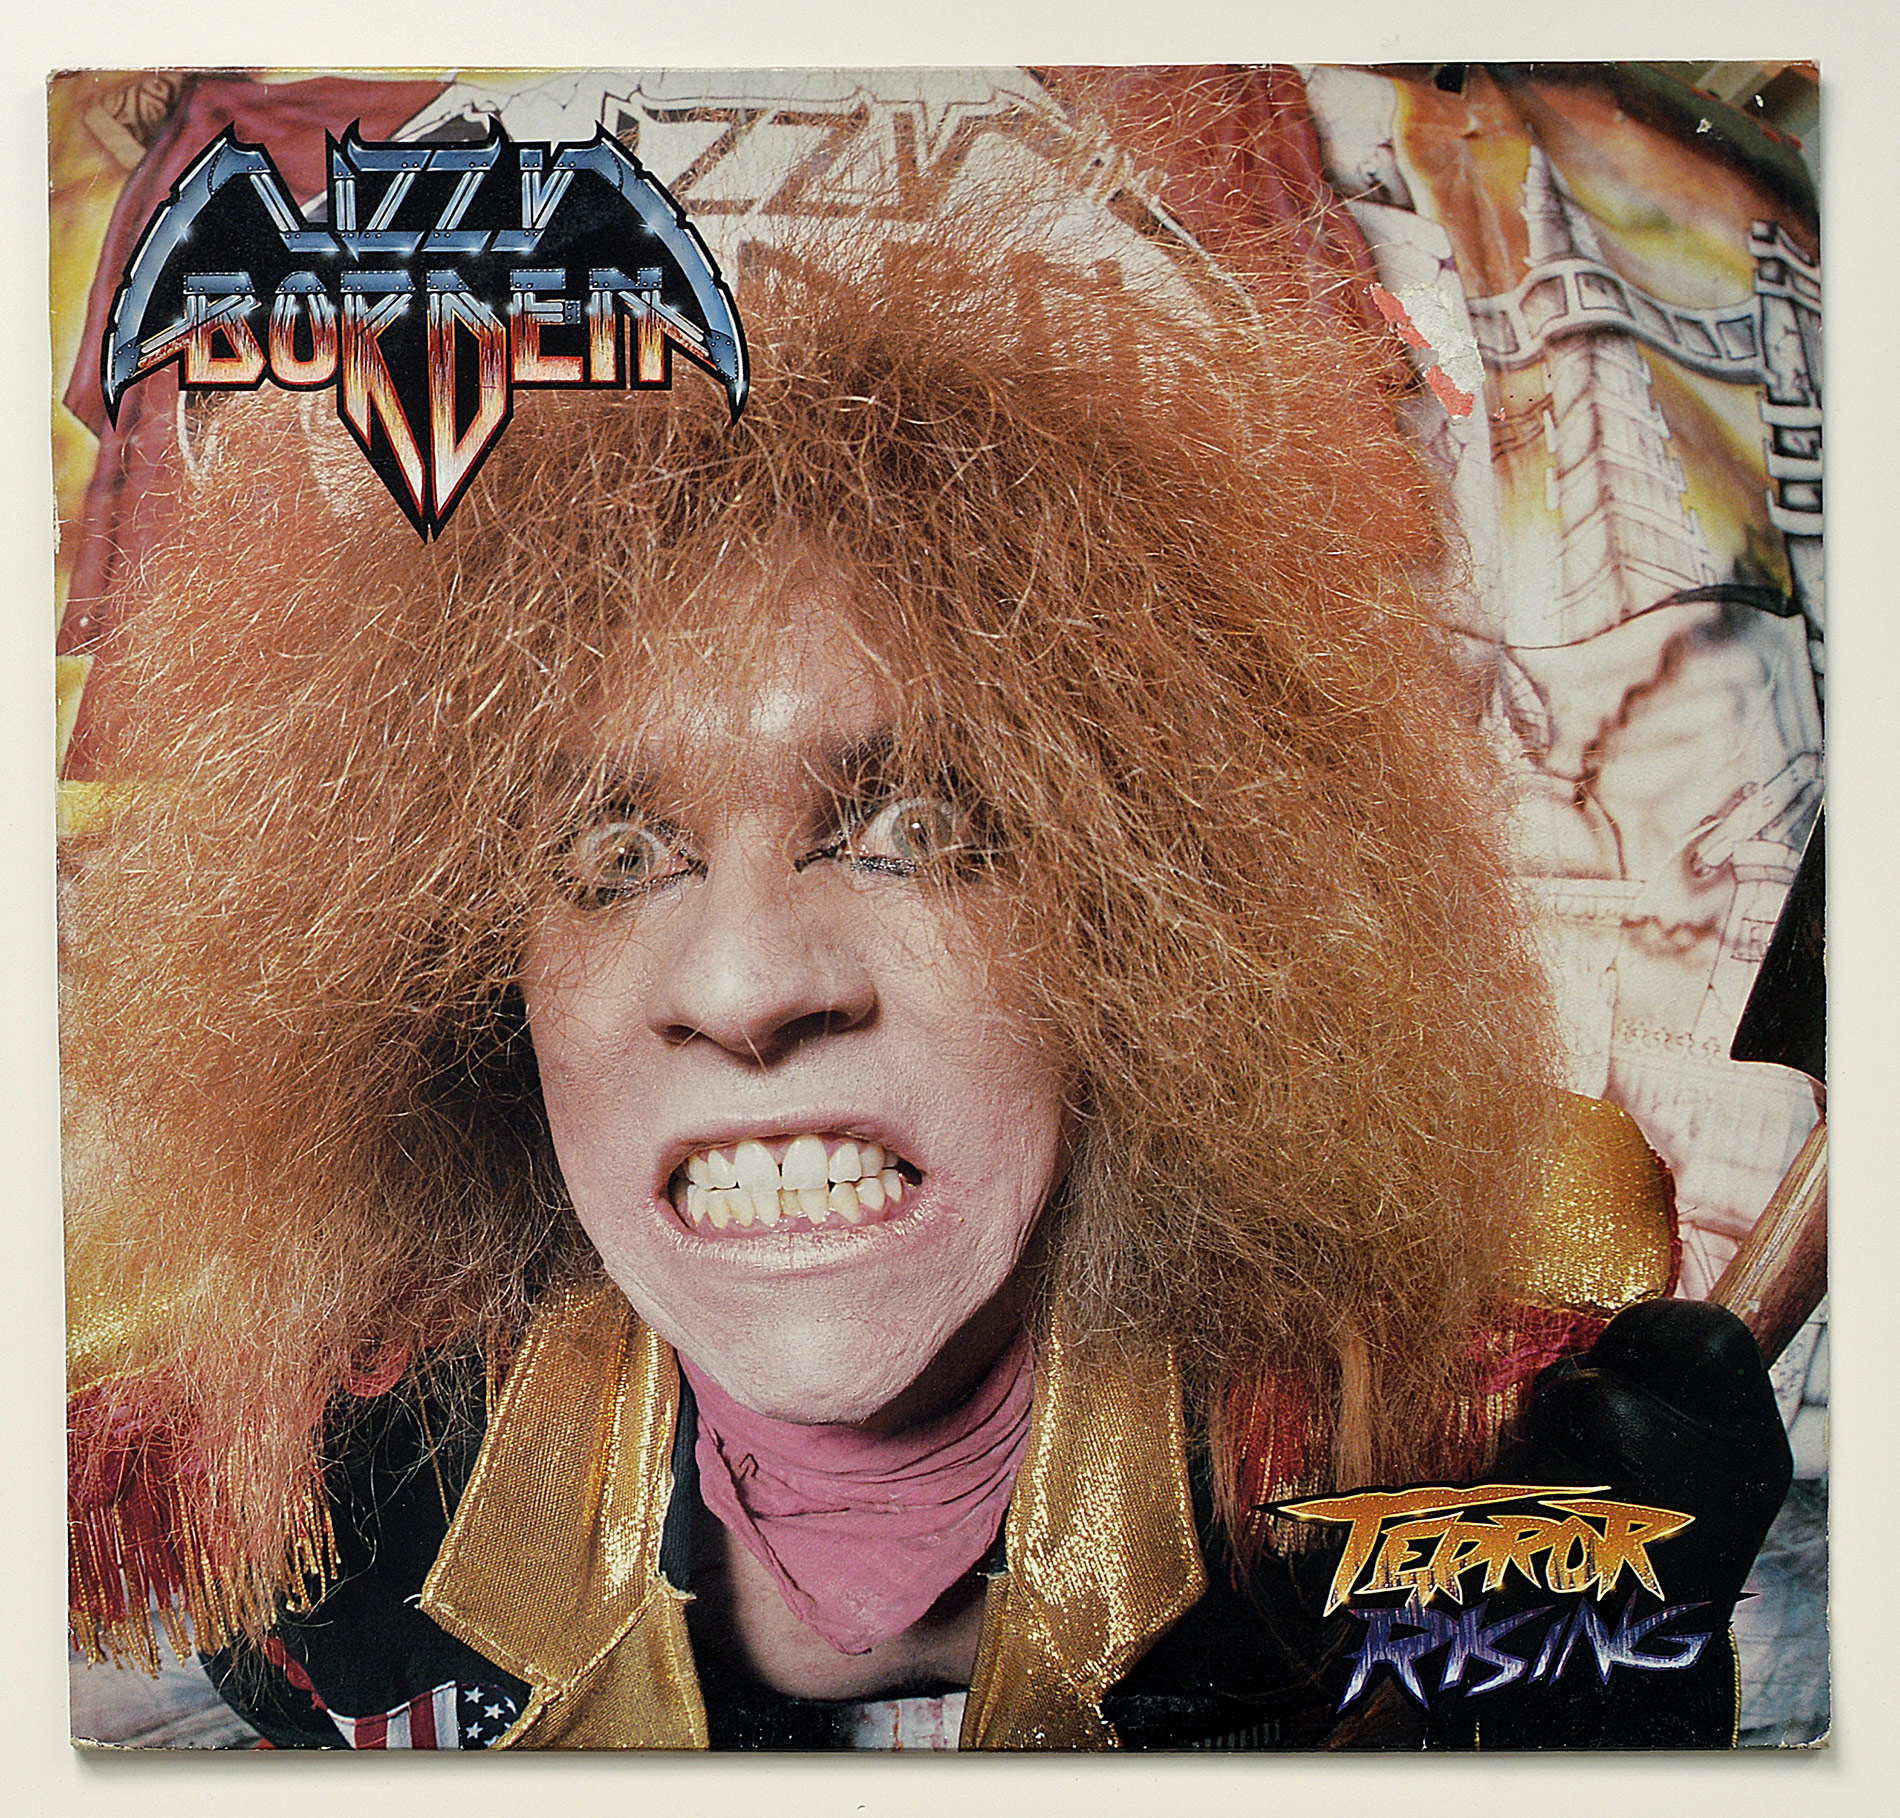 LIZZY BORDEN - Terror Rising Metal blade Records 12" Vinyl EP Album  front cover https://vinyl-records.nl